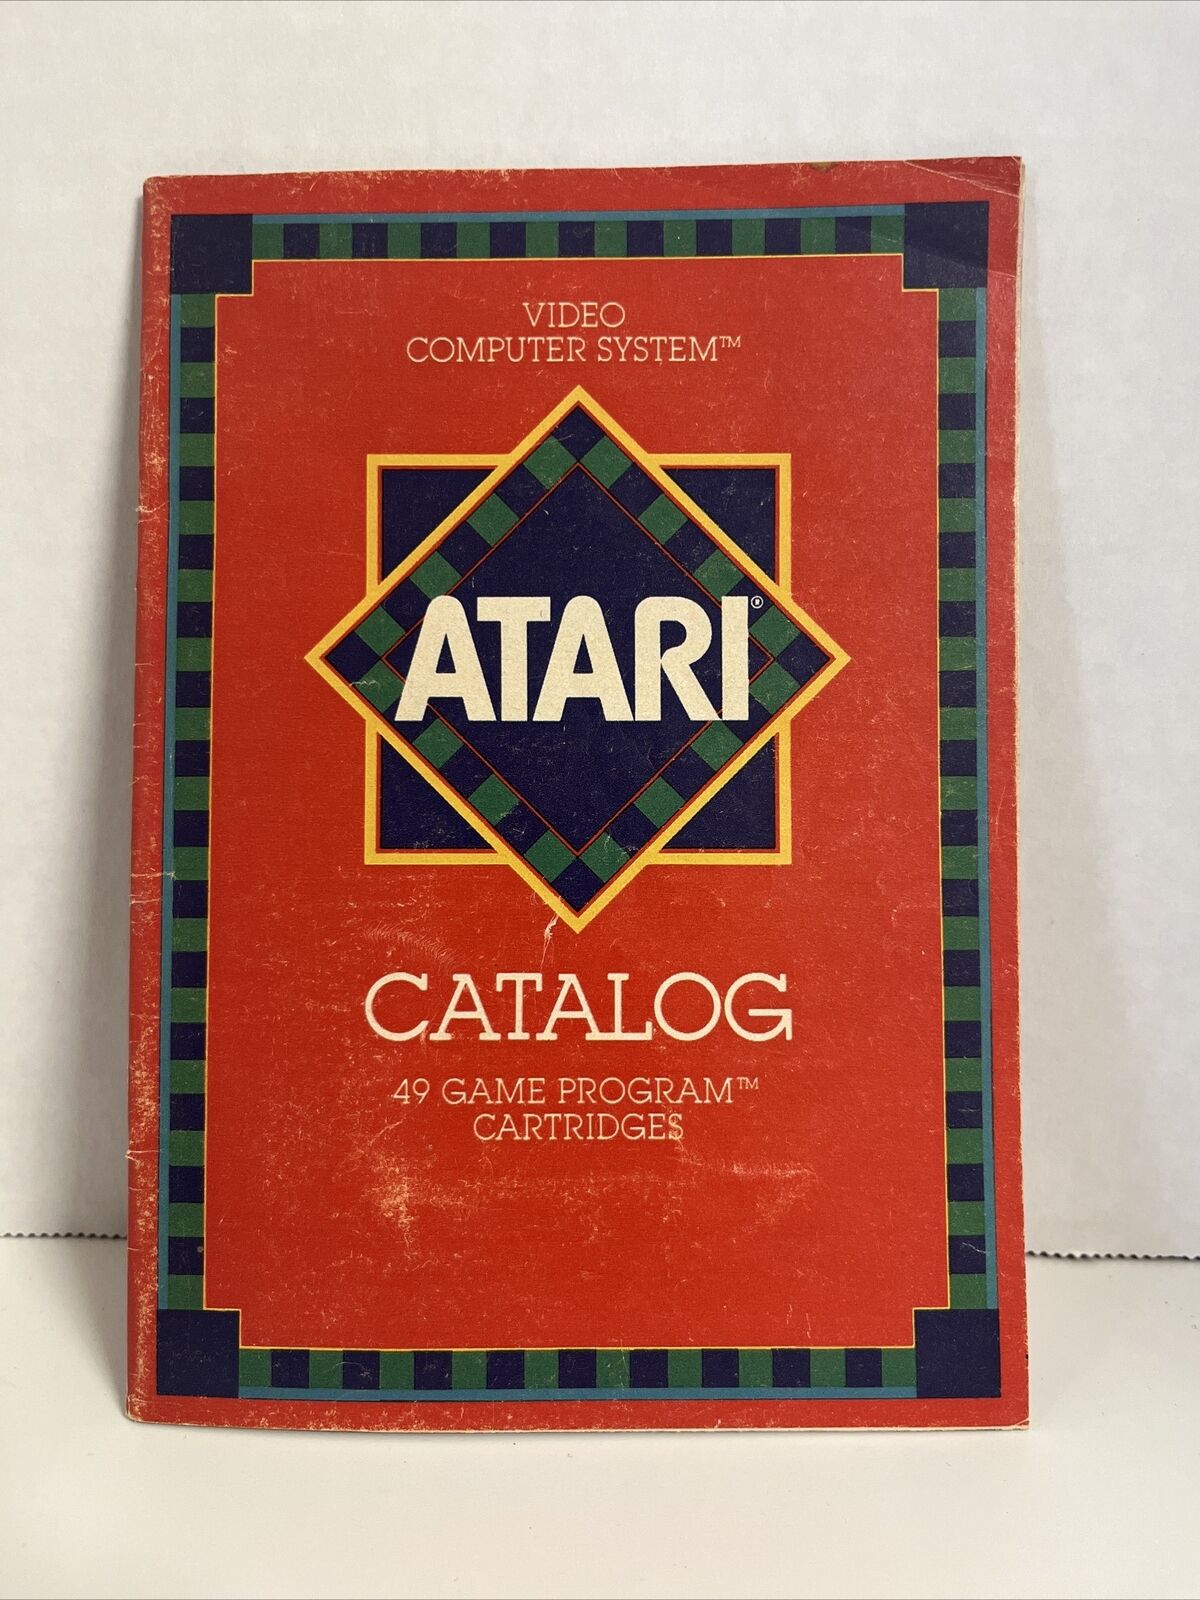 Vintage 1982 Atari Video Computer System Catalog 49 Game Program Cartridges 